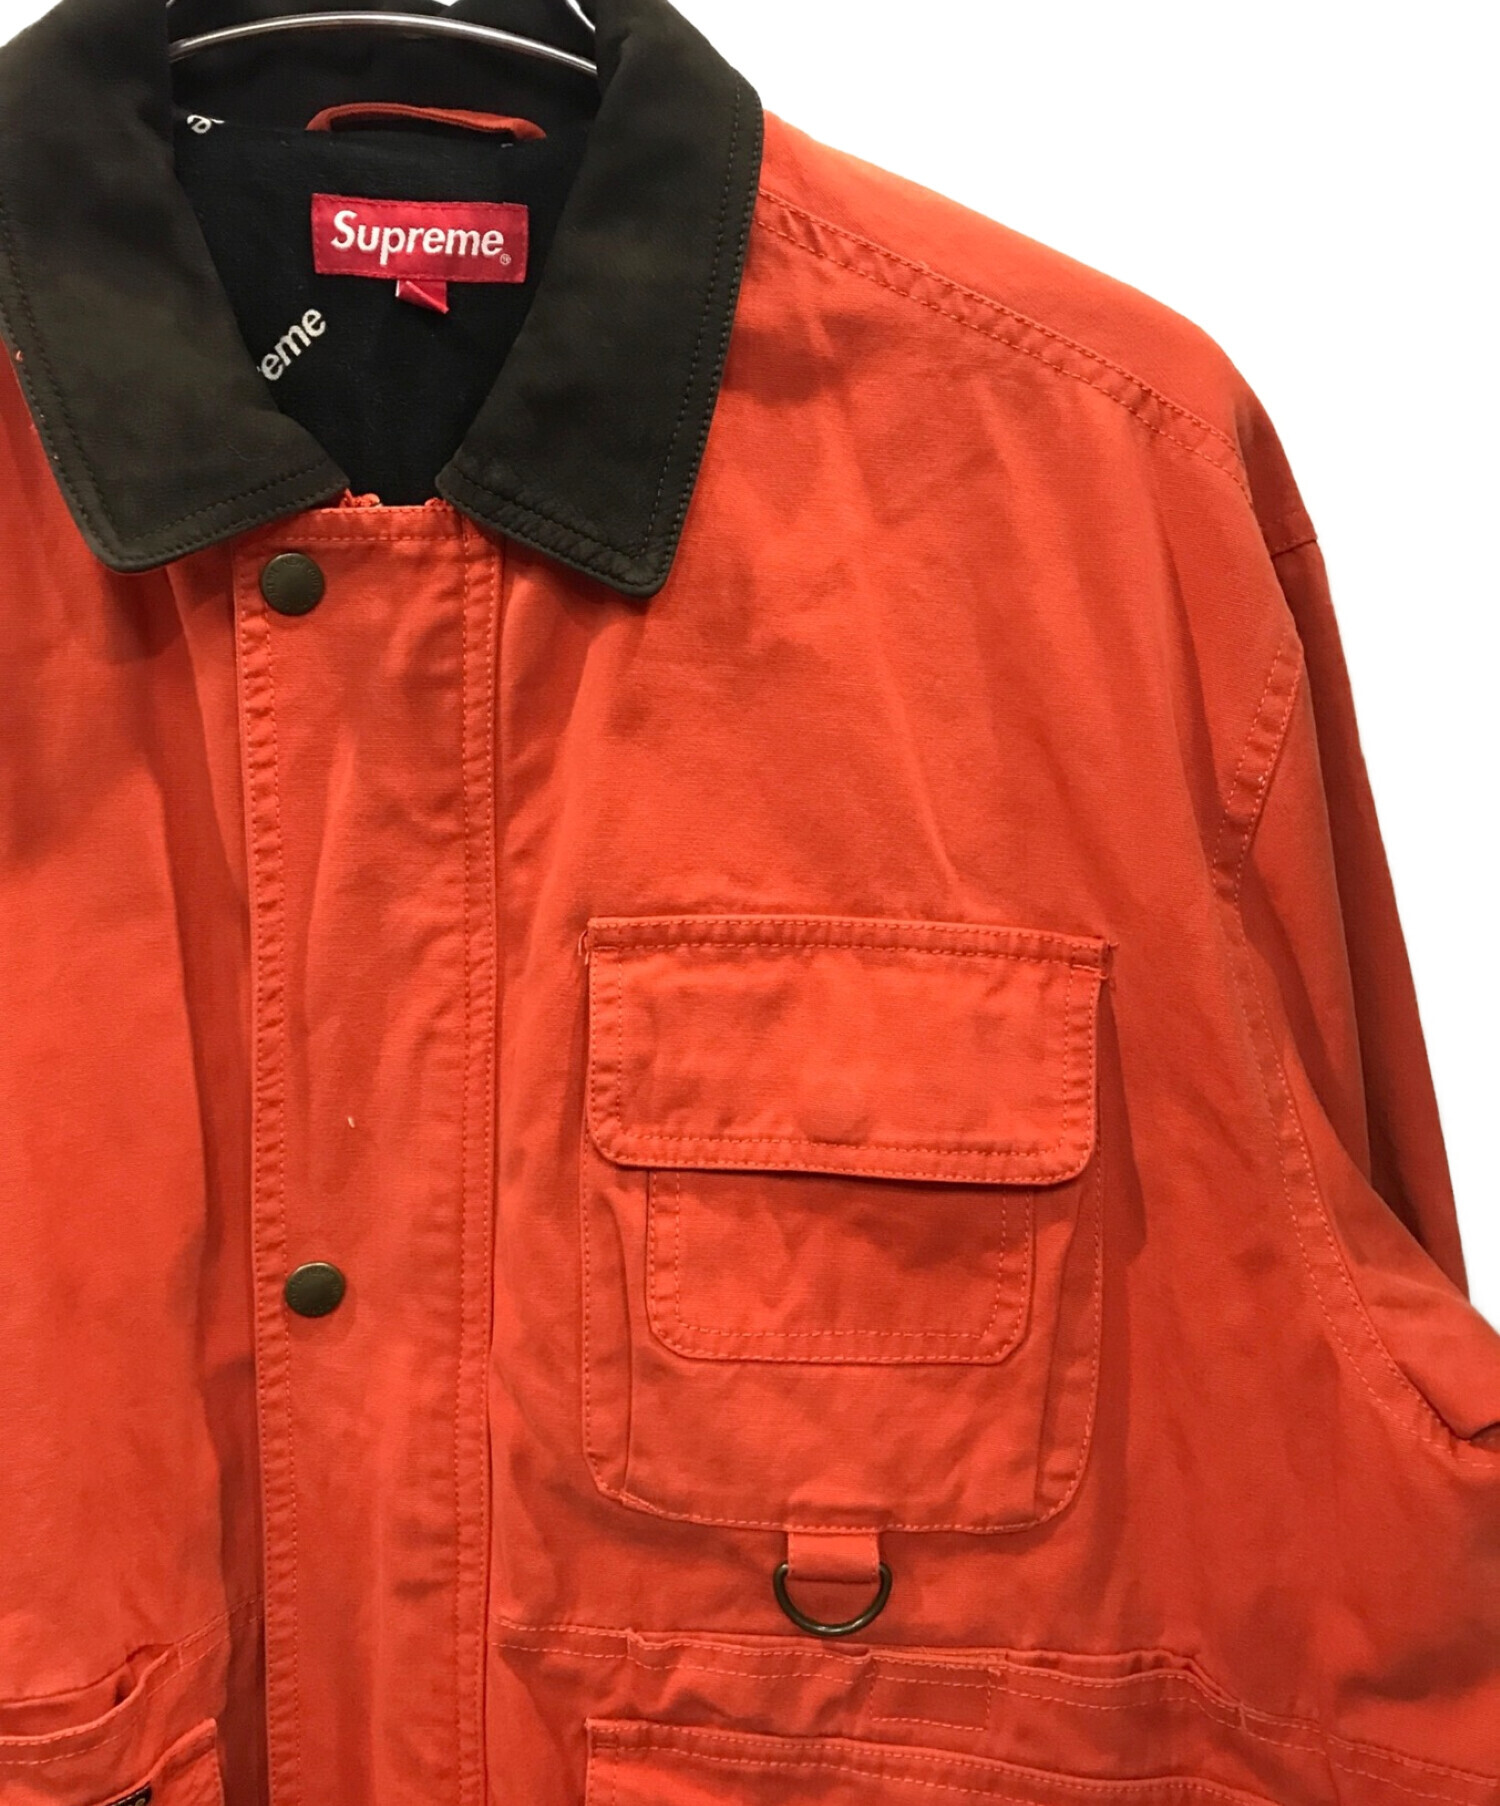 SupremeSupreme field jacket 18aw オレンジ